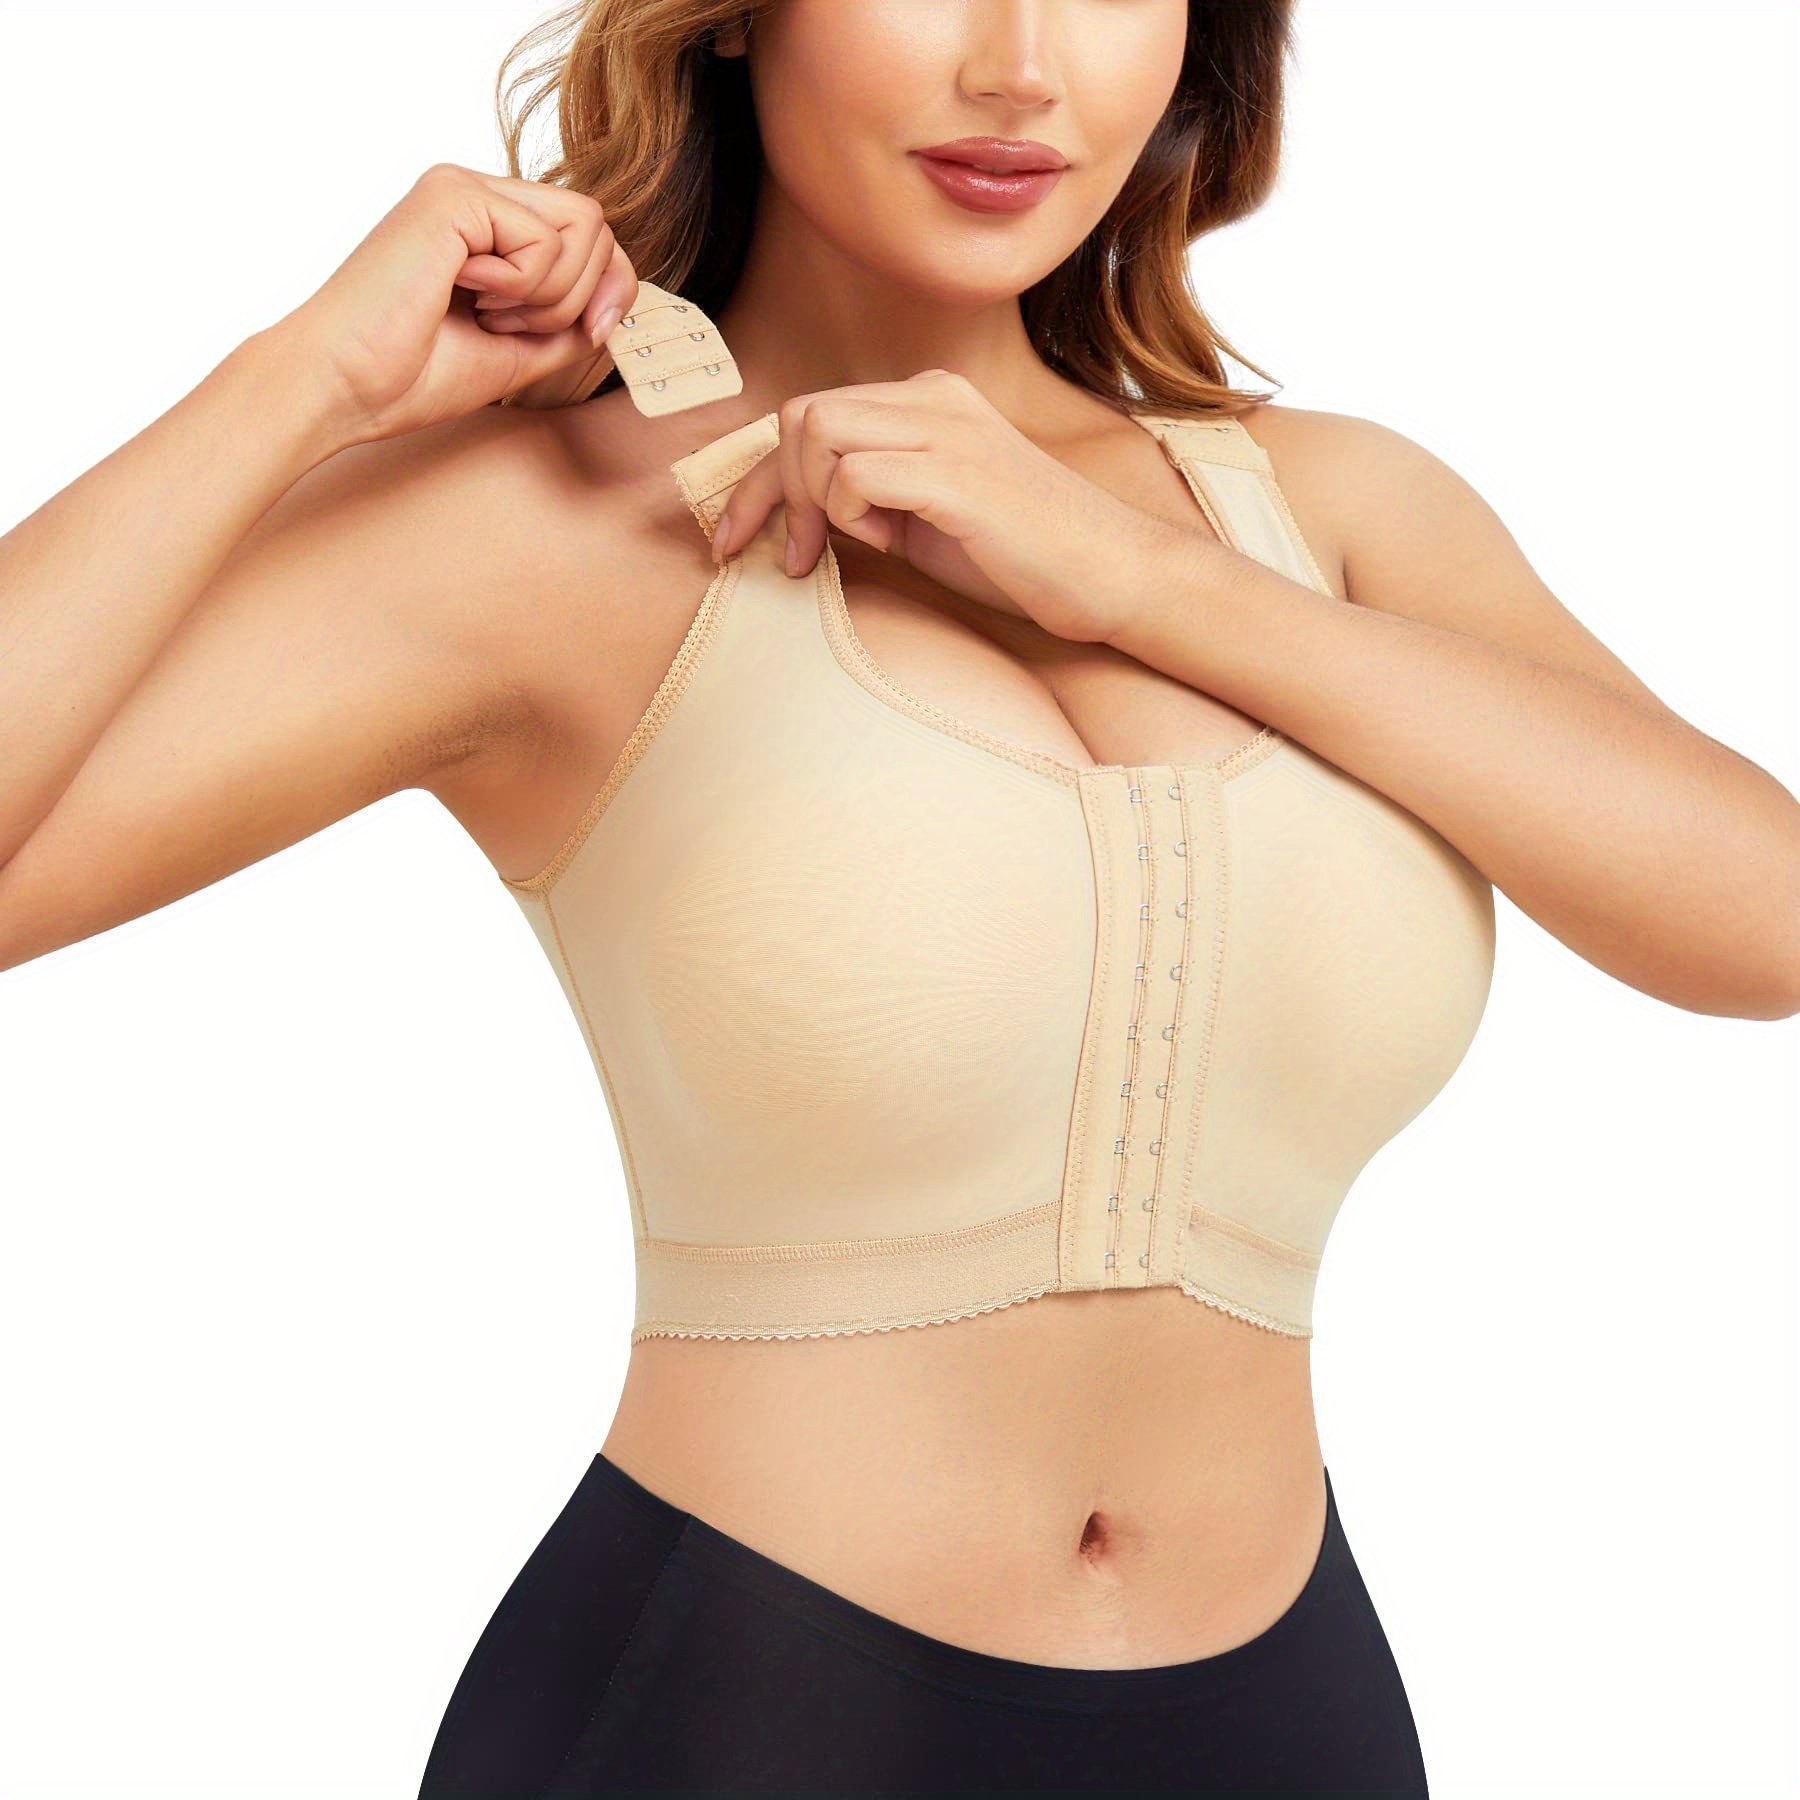 Tarmeek Women's Sports Bras Comfort Front Closure Brassiere Support Sports  Bra Plus Size Bra Adjustable Wide Strap 